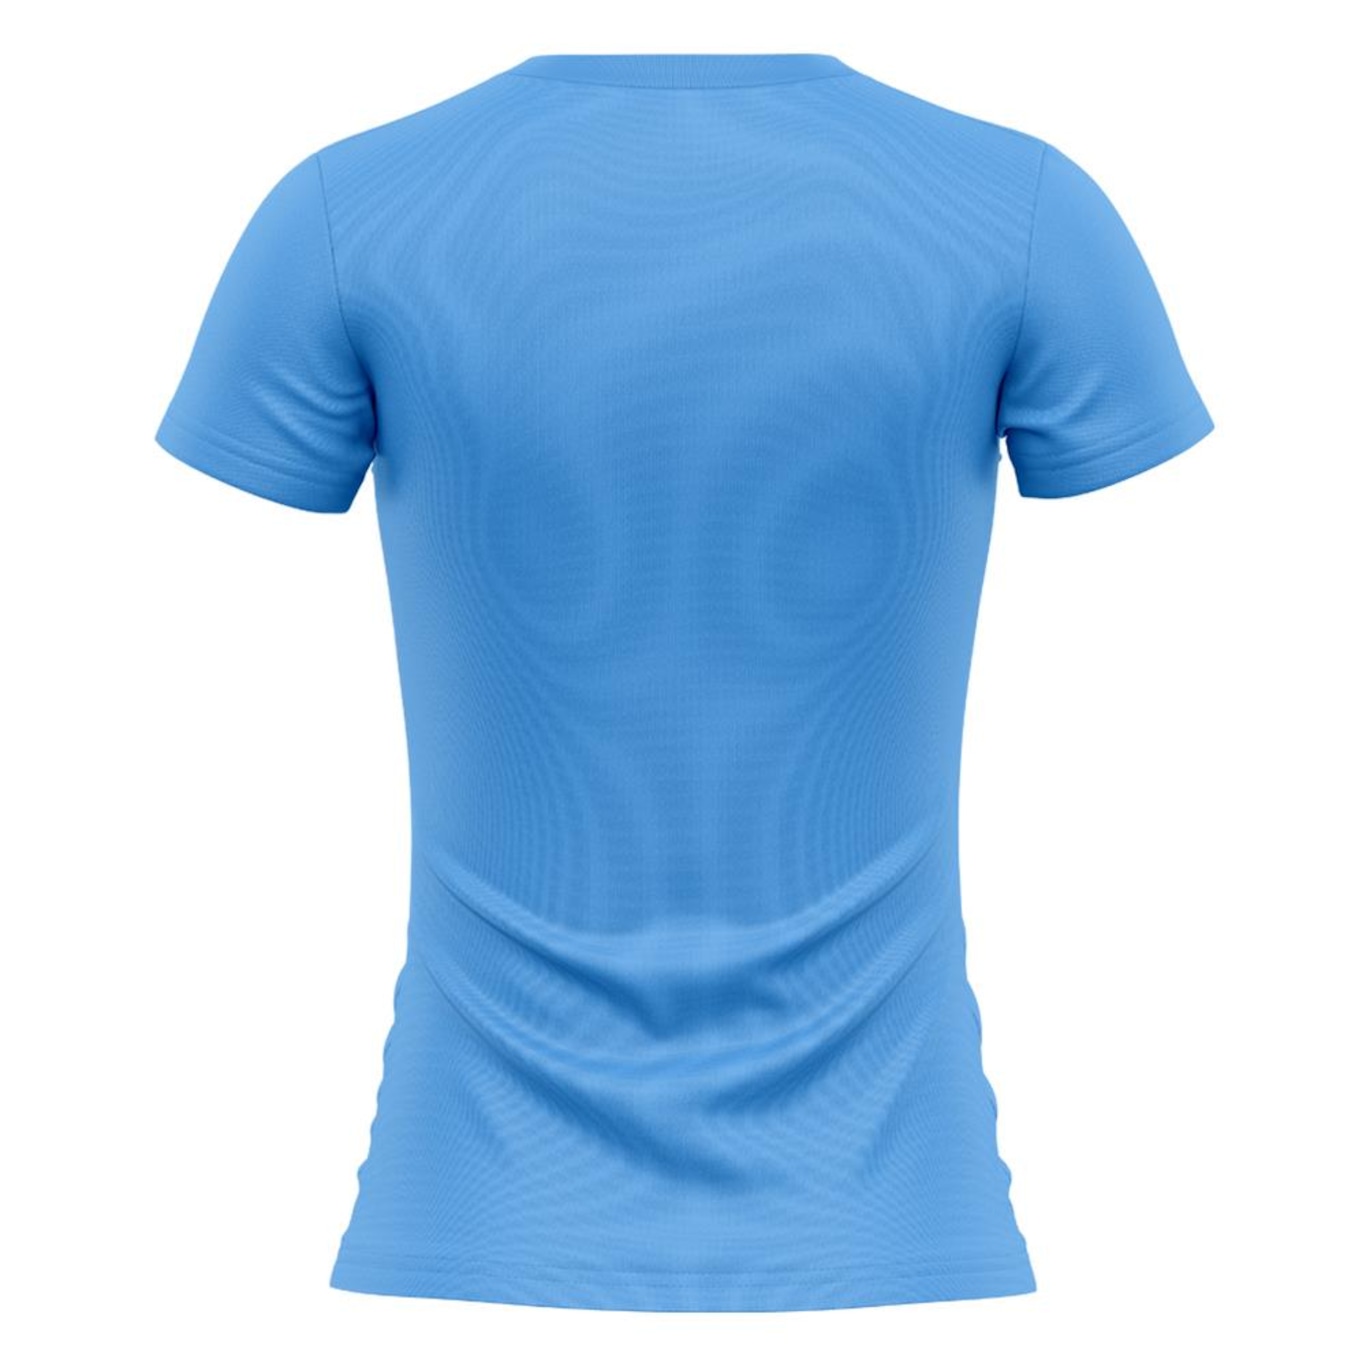 Blusa Academia Feminina Camiseta Caminhada Camisa Academia Fitness Protecao  UV Treino - Azul+Branco